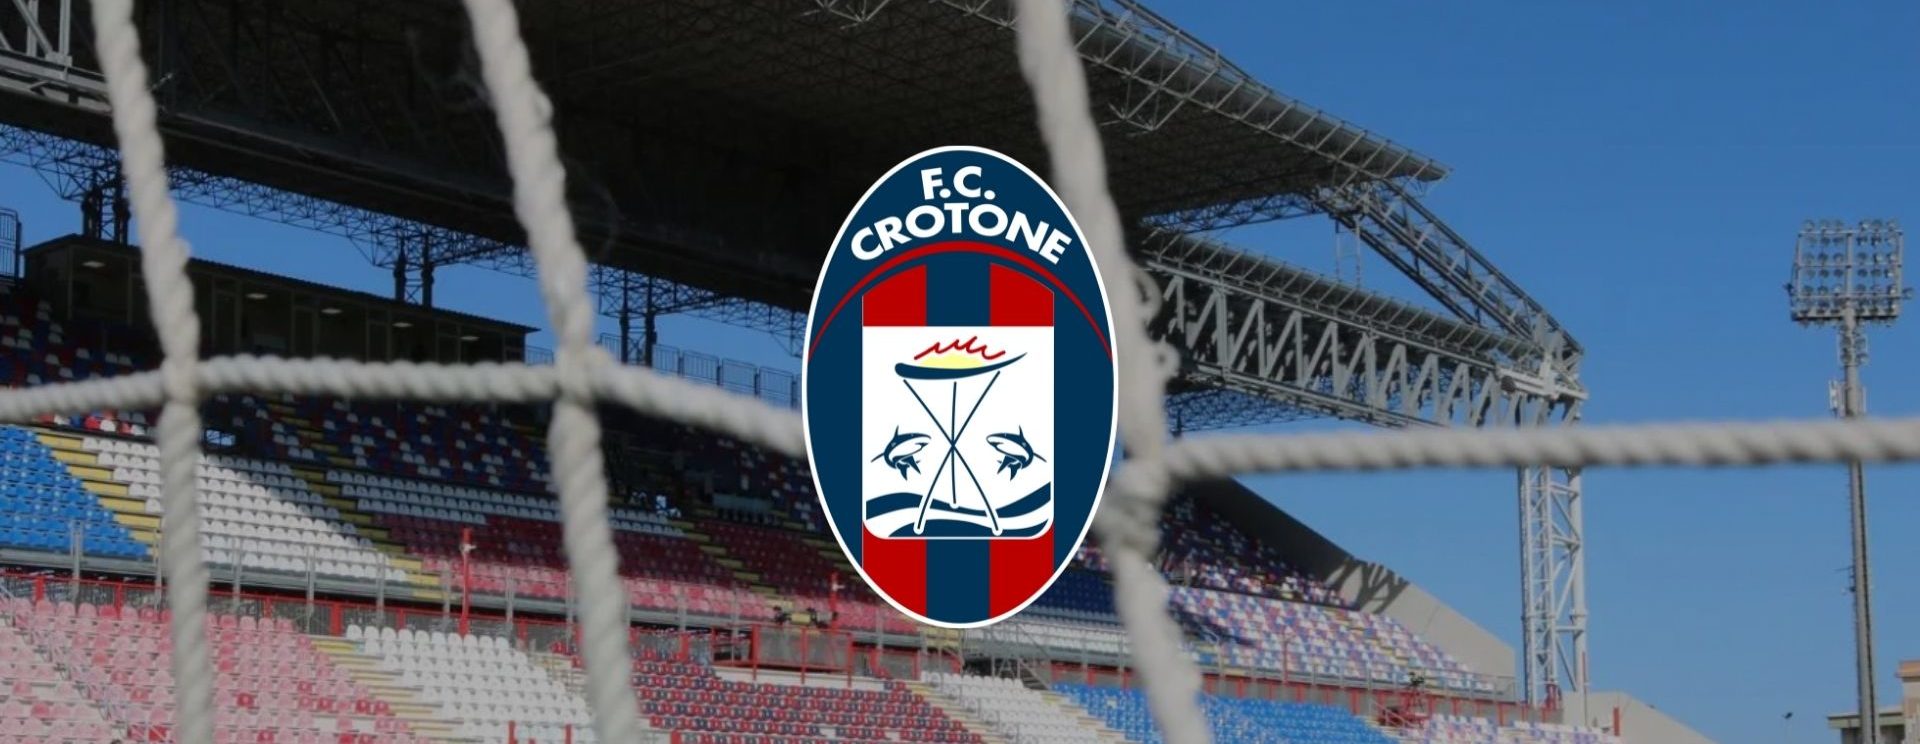 logo du FC Crotone